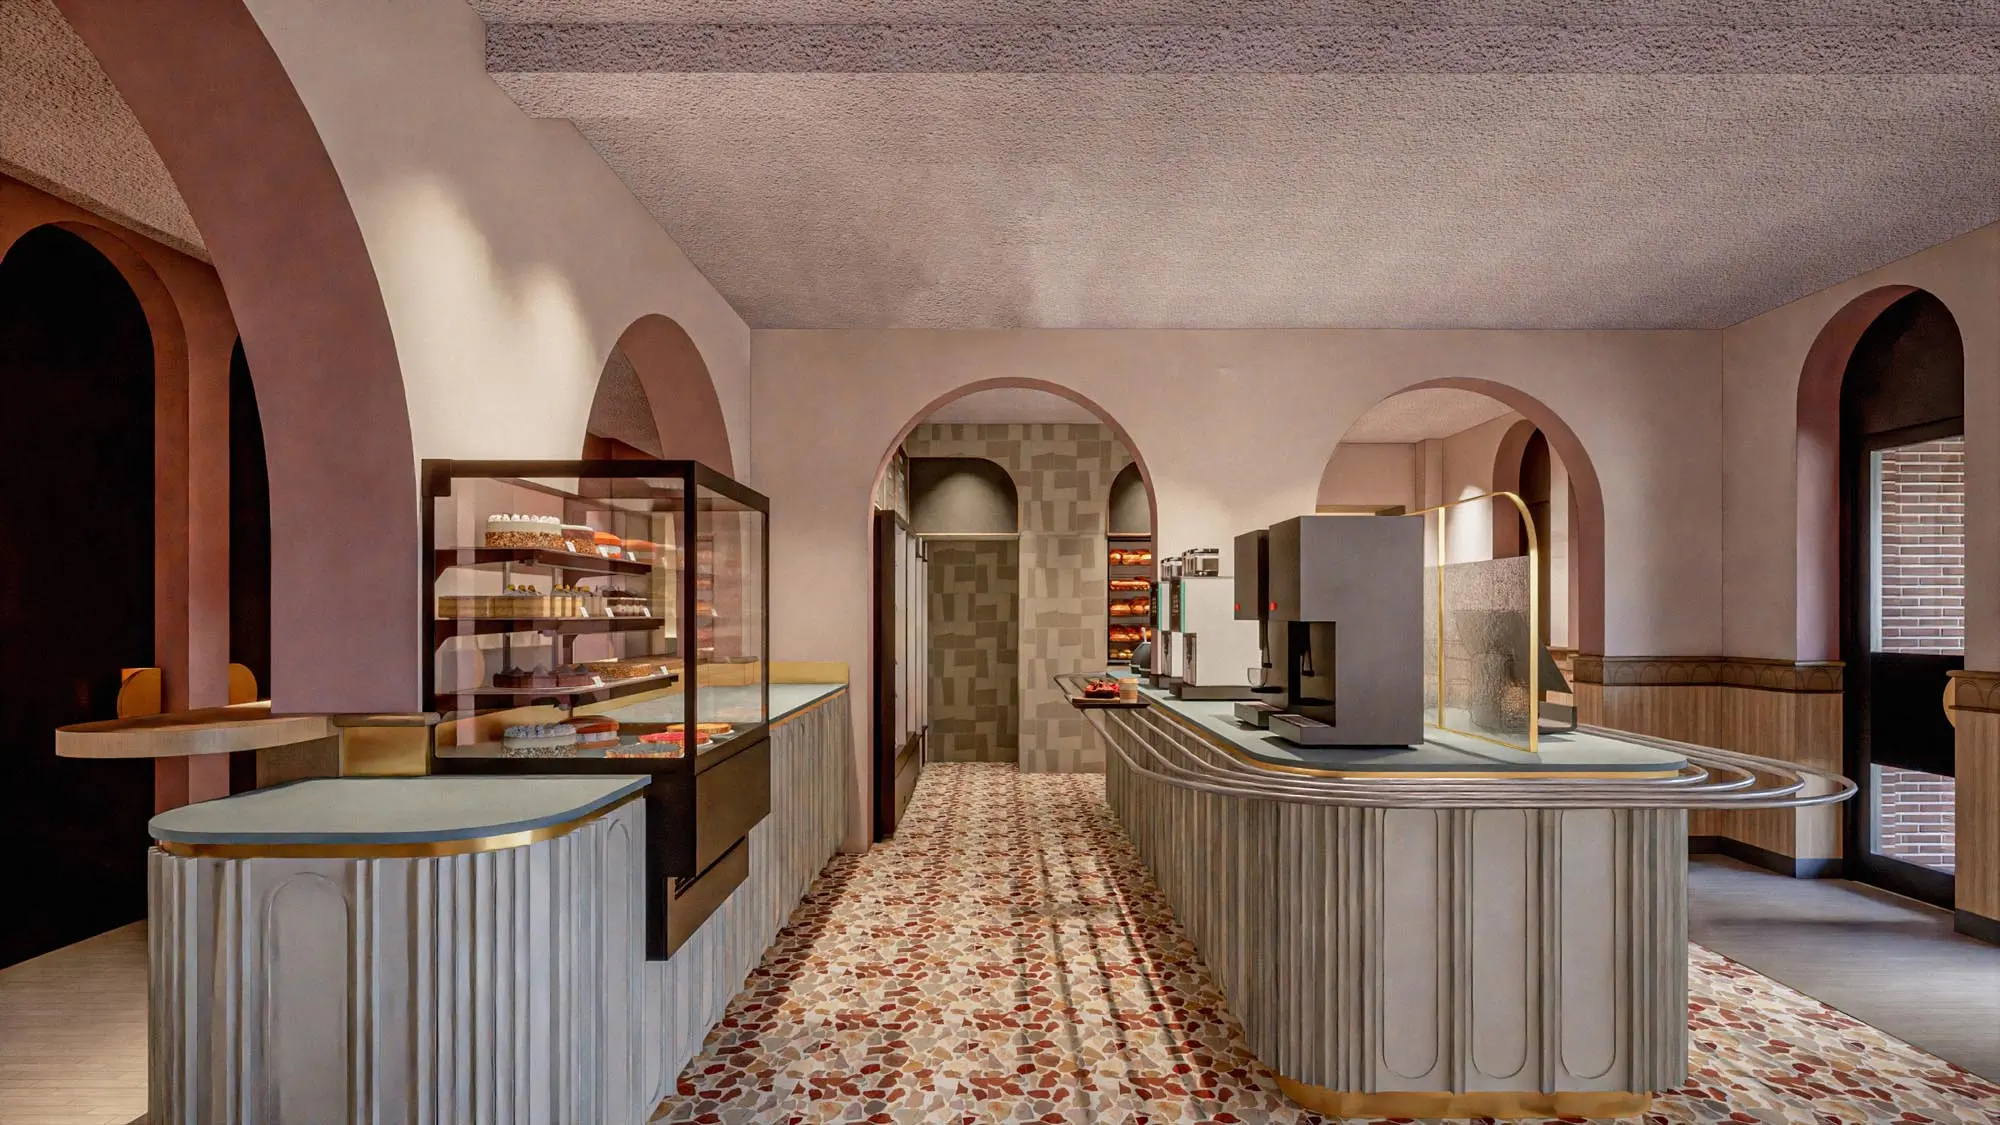 rendering - tropenmuseum - amsterdam - cafe - eettafel - renoveren - enzo architectuur N interieur - design - lobby - huiskamer - kiosk